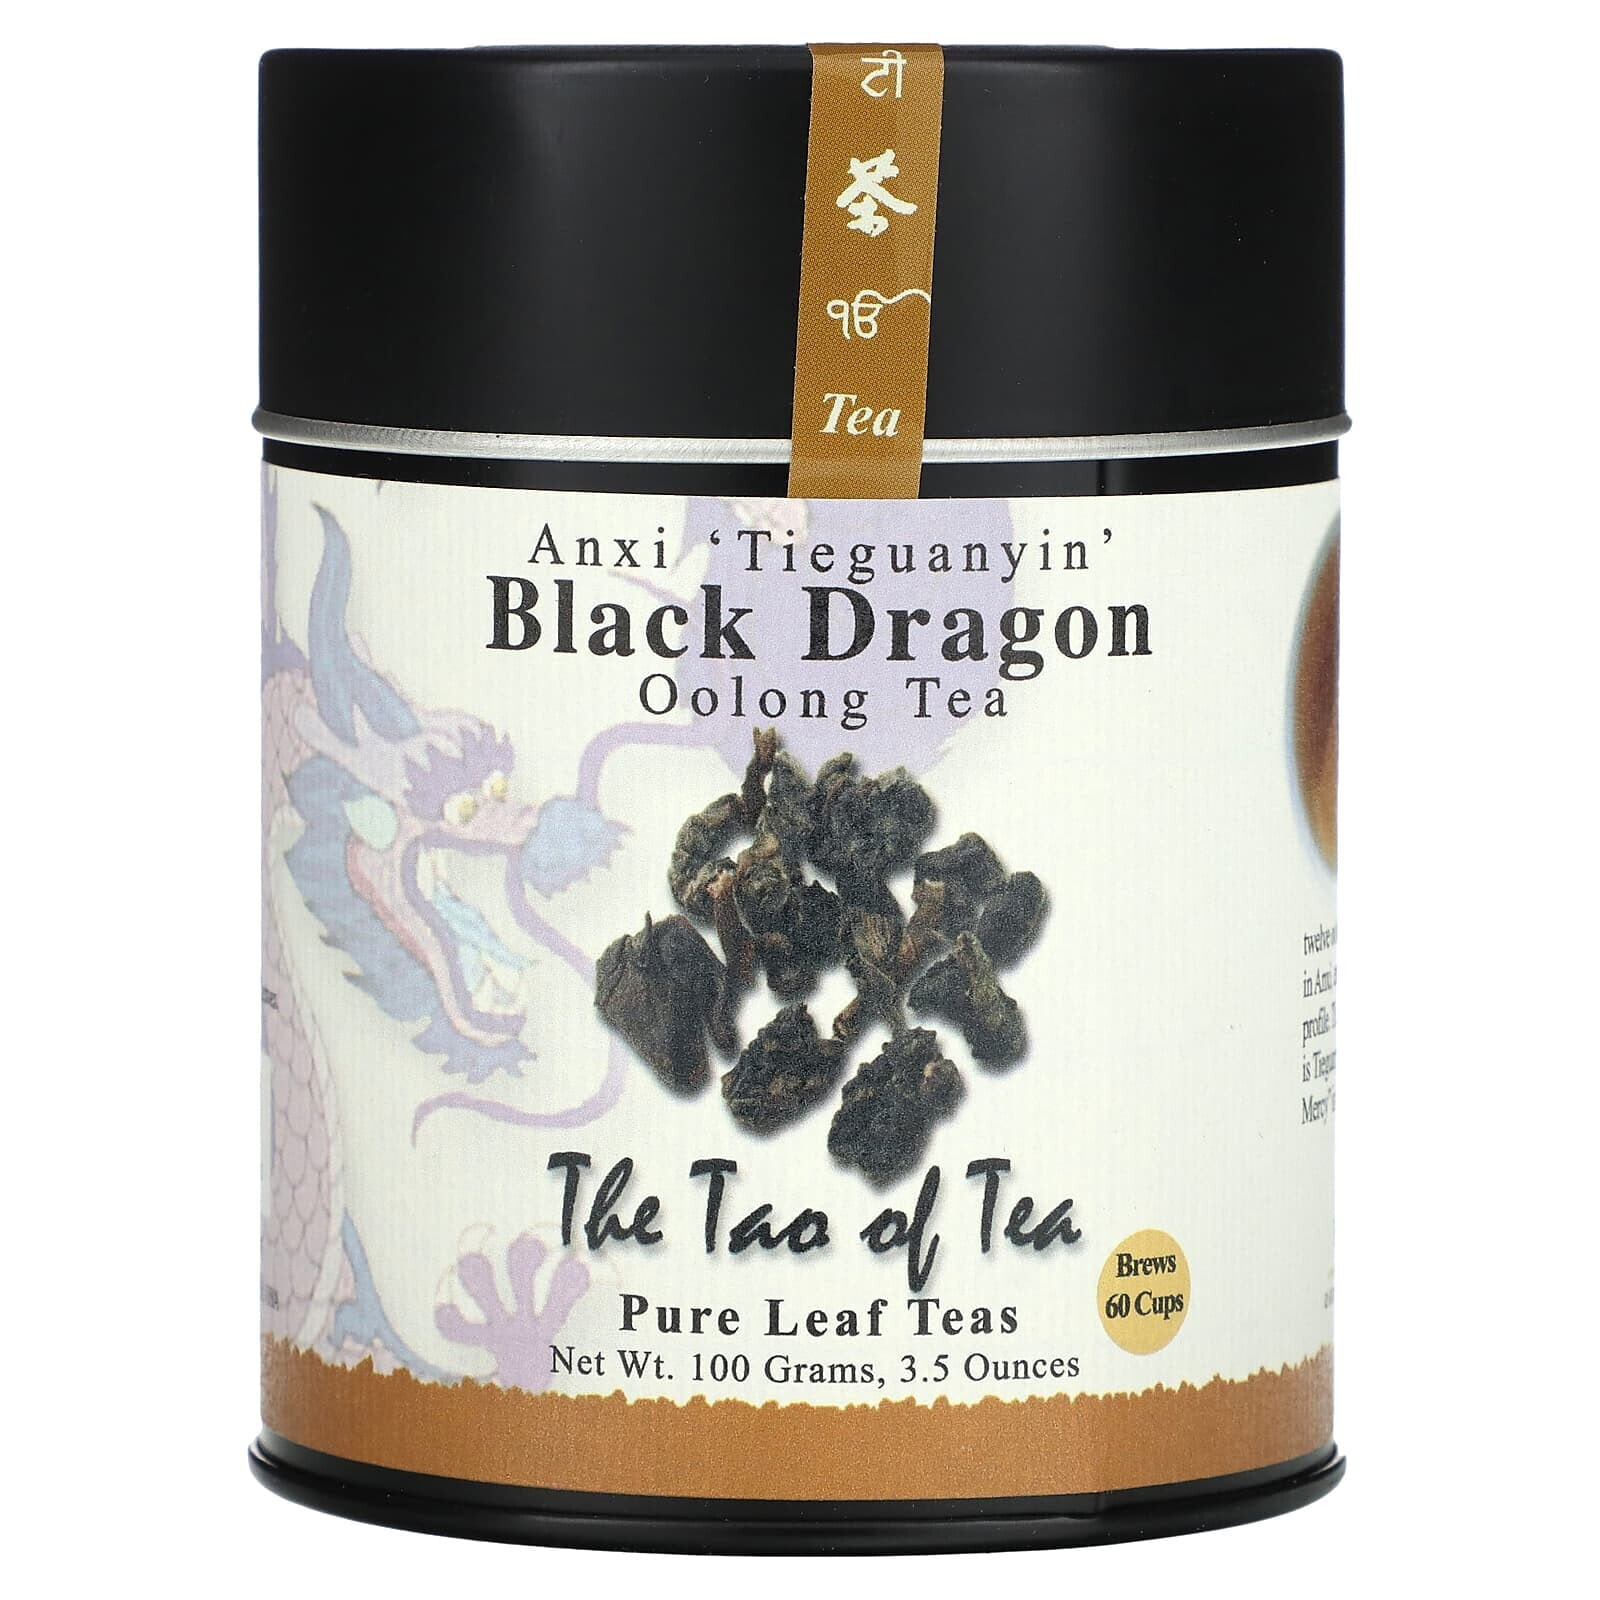 The Tao of Tea, Османтус улун, 71 г (2,5 унции)